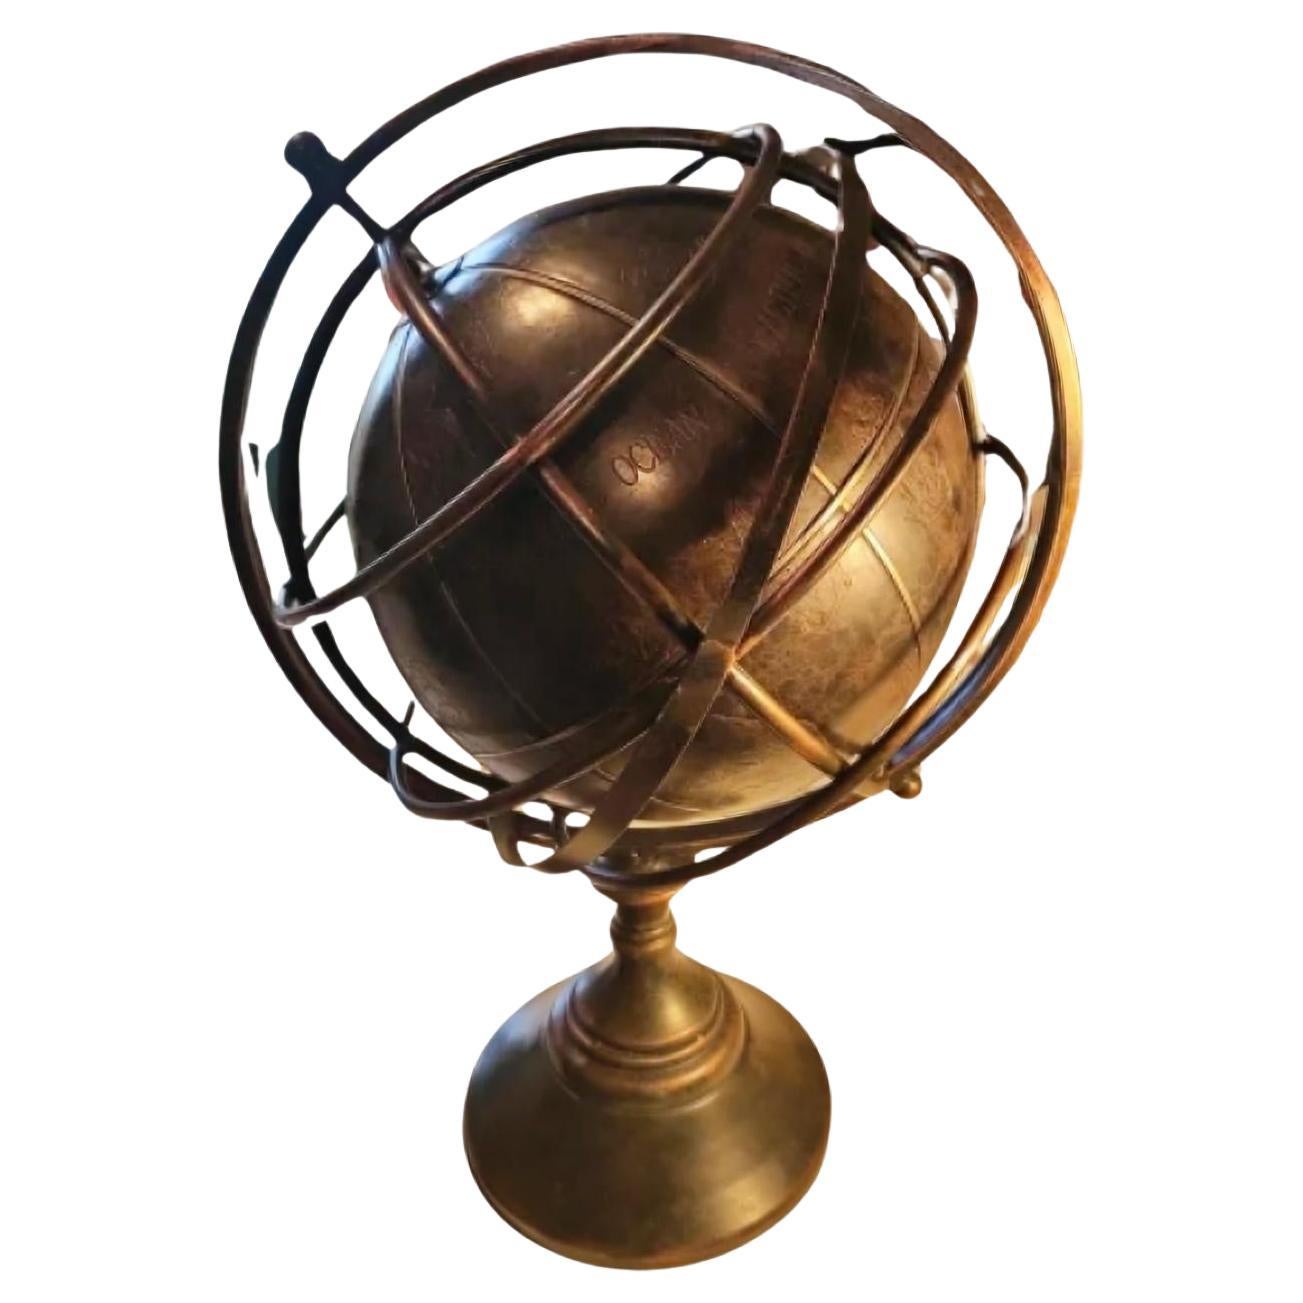 Rare English Nautical Globe with Armillary Sphere (1930) 20th Century